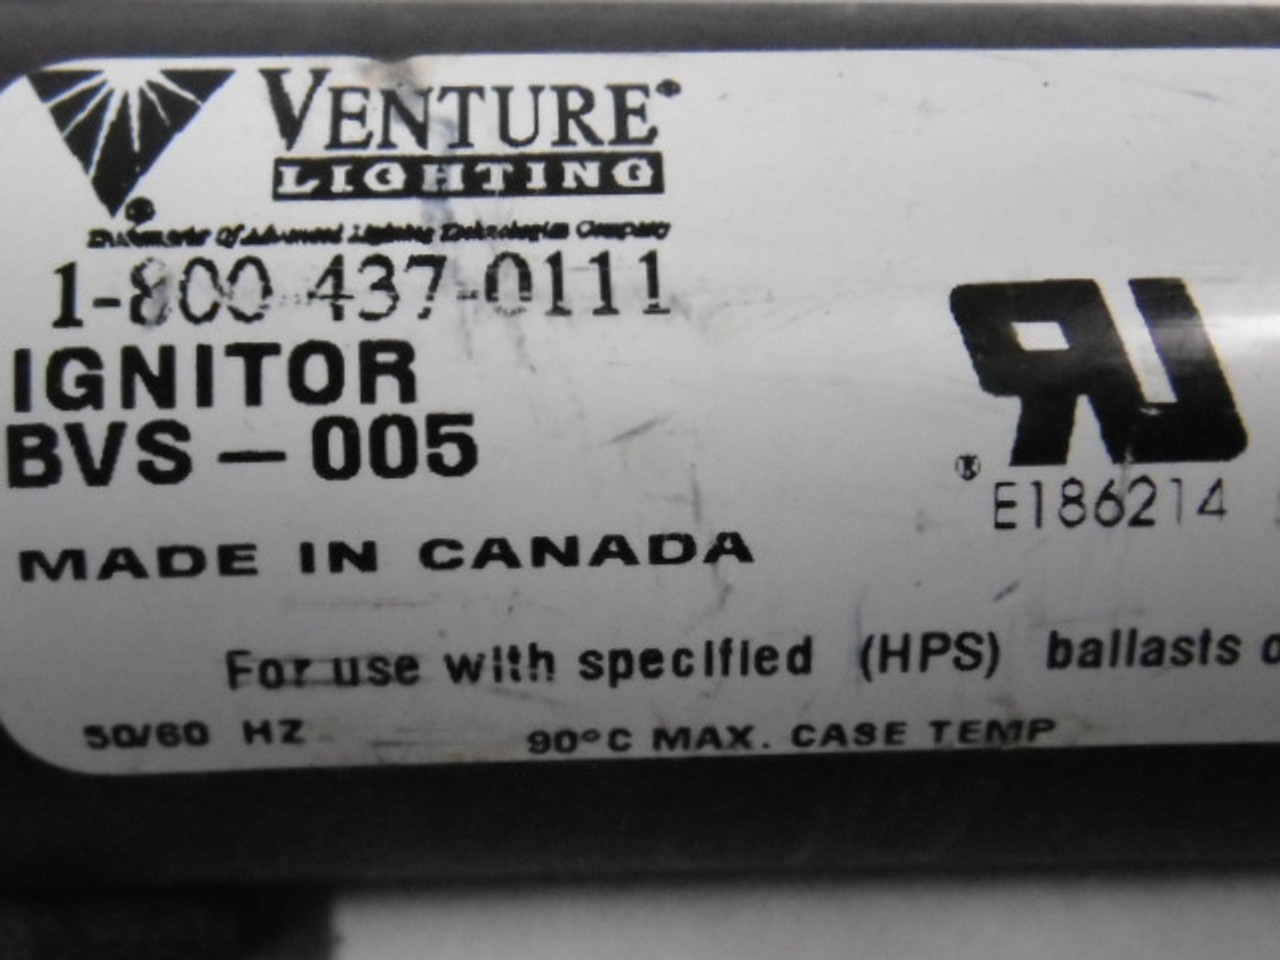 Venture Lighting BVS-005 Igniter USED